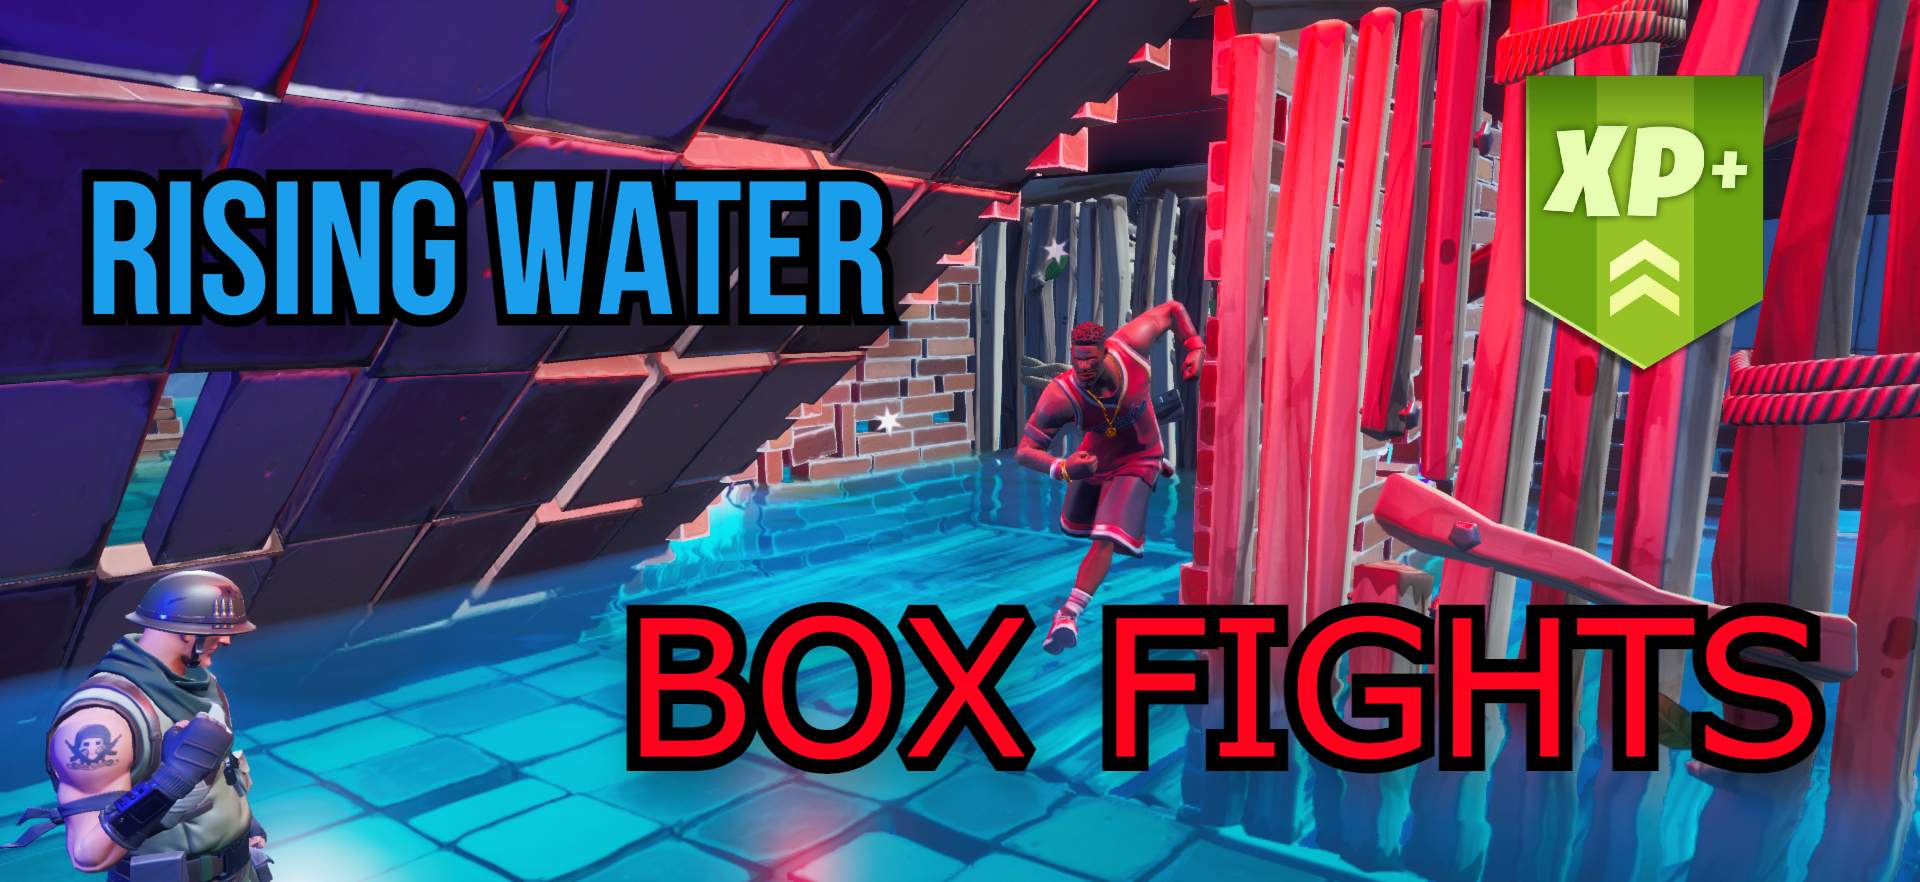 🌊RISING WATER BOX FIGHTS (XP)🌊